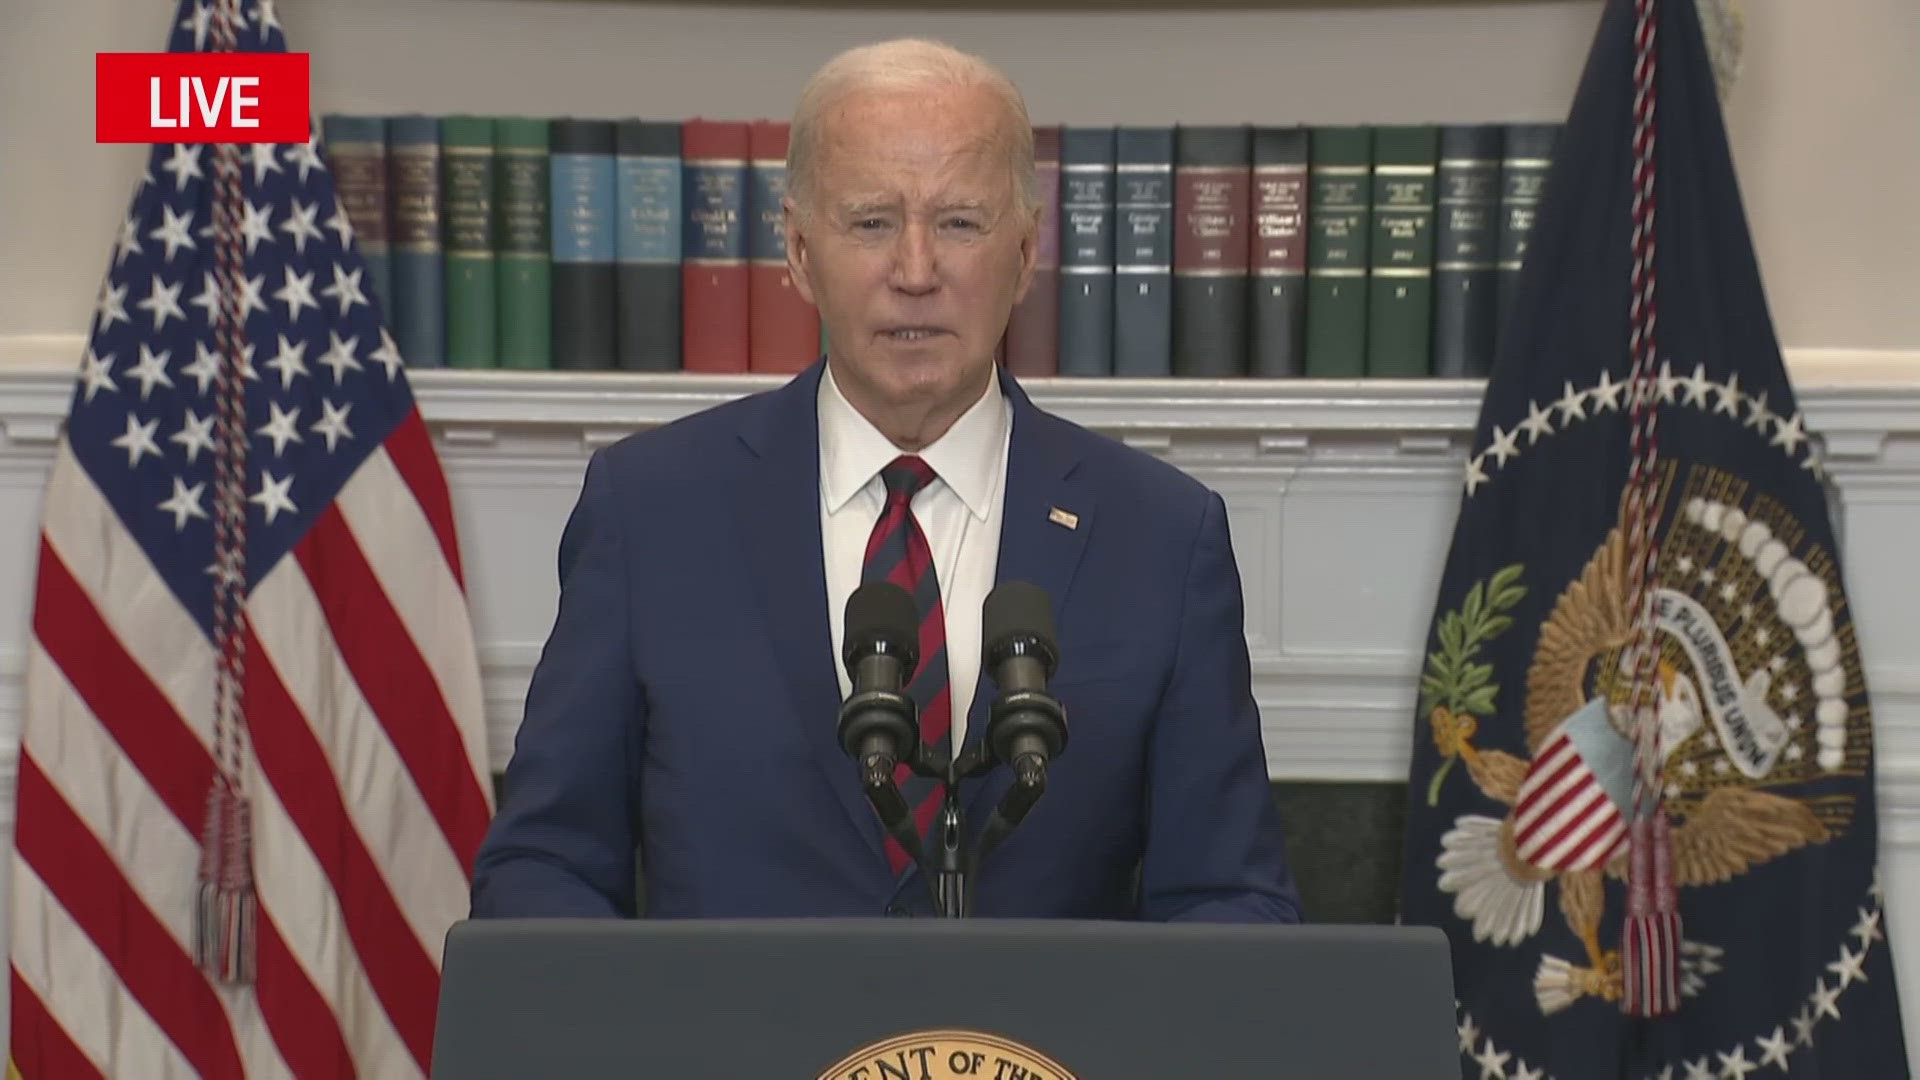 President Joe Biden addressed the nation in the wake of the collapse of Baltimore's Key Bridge.